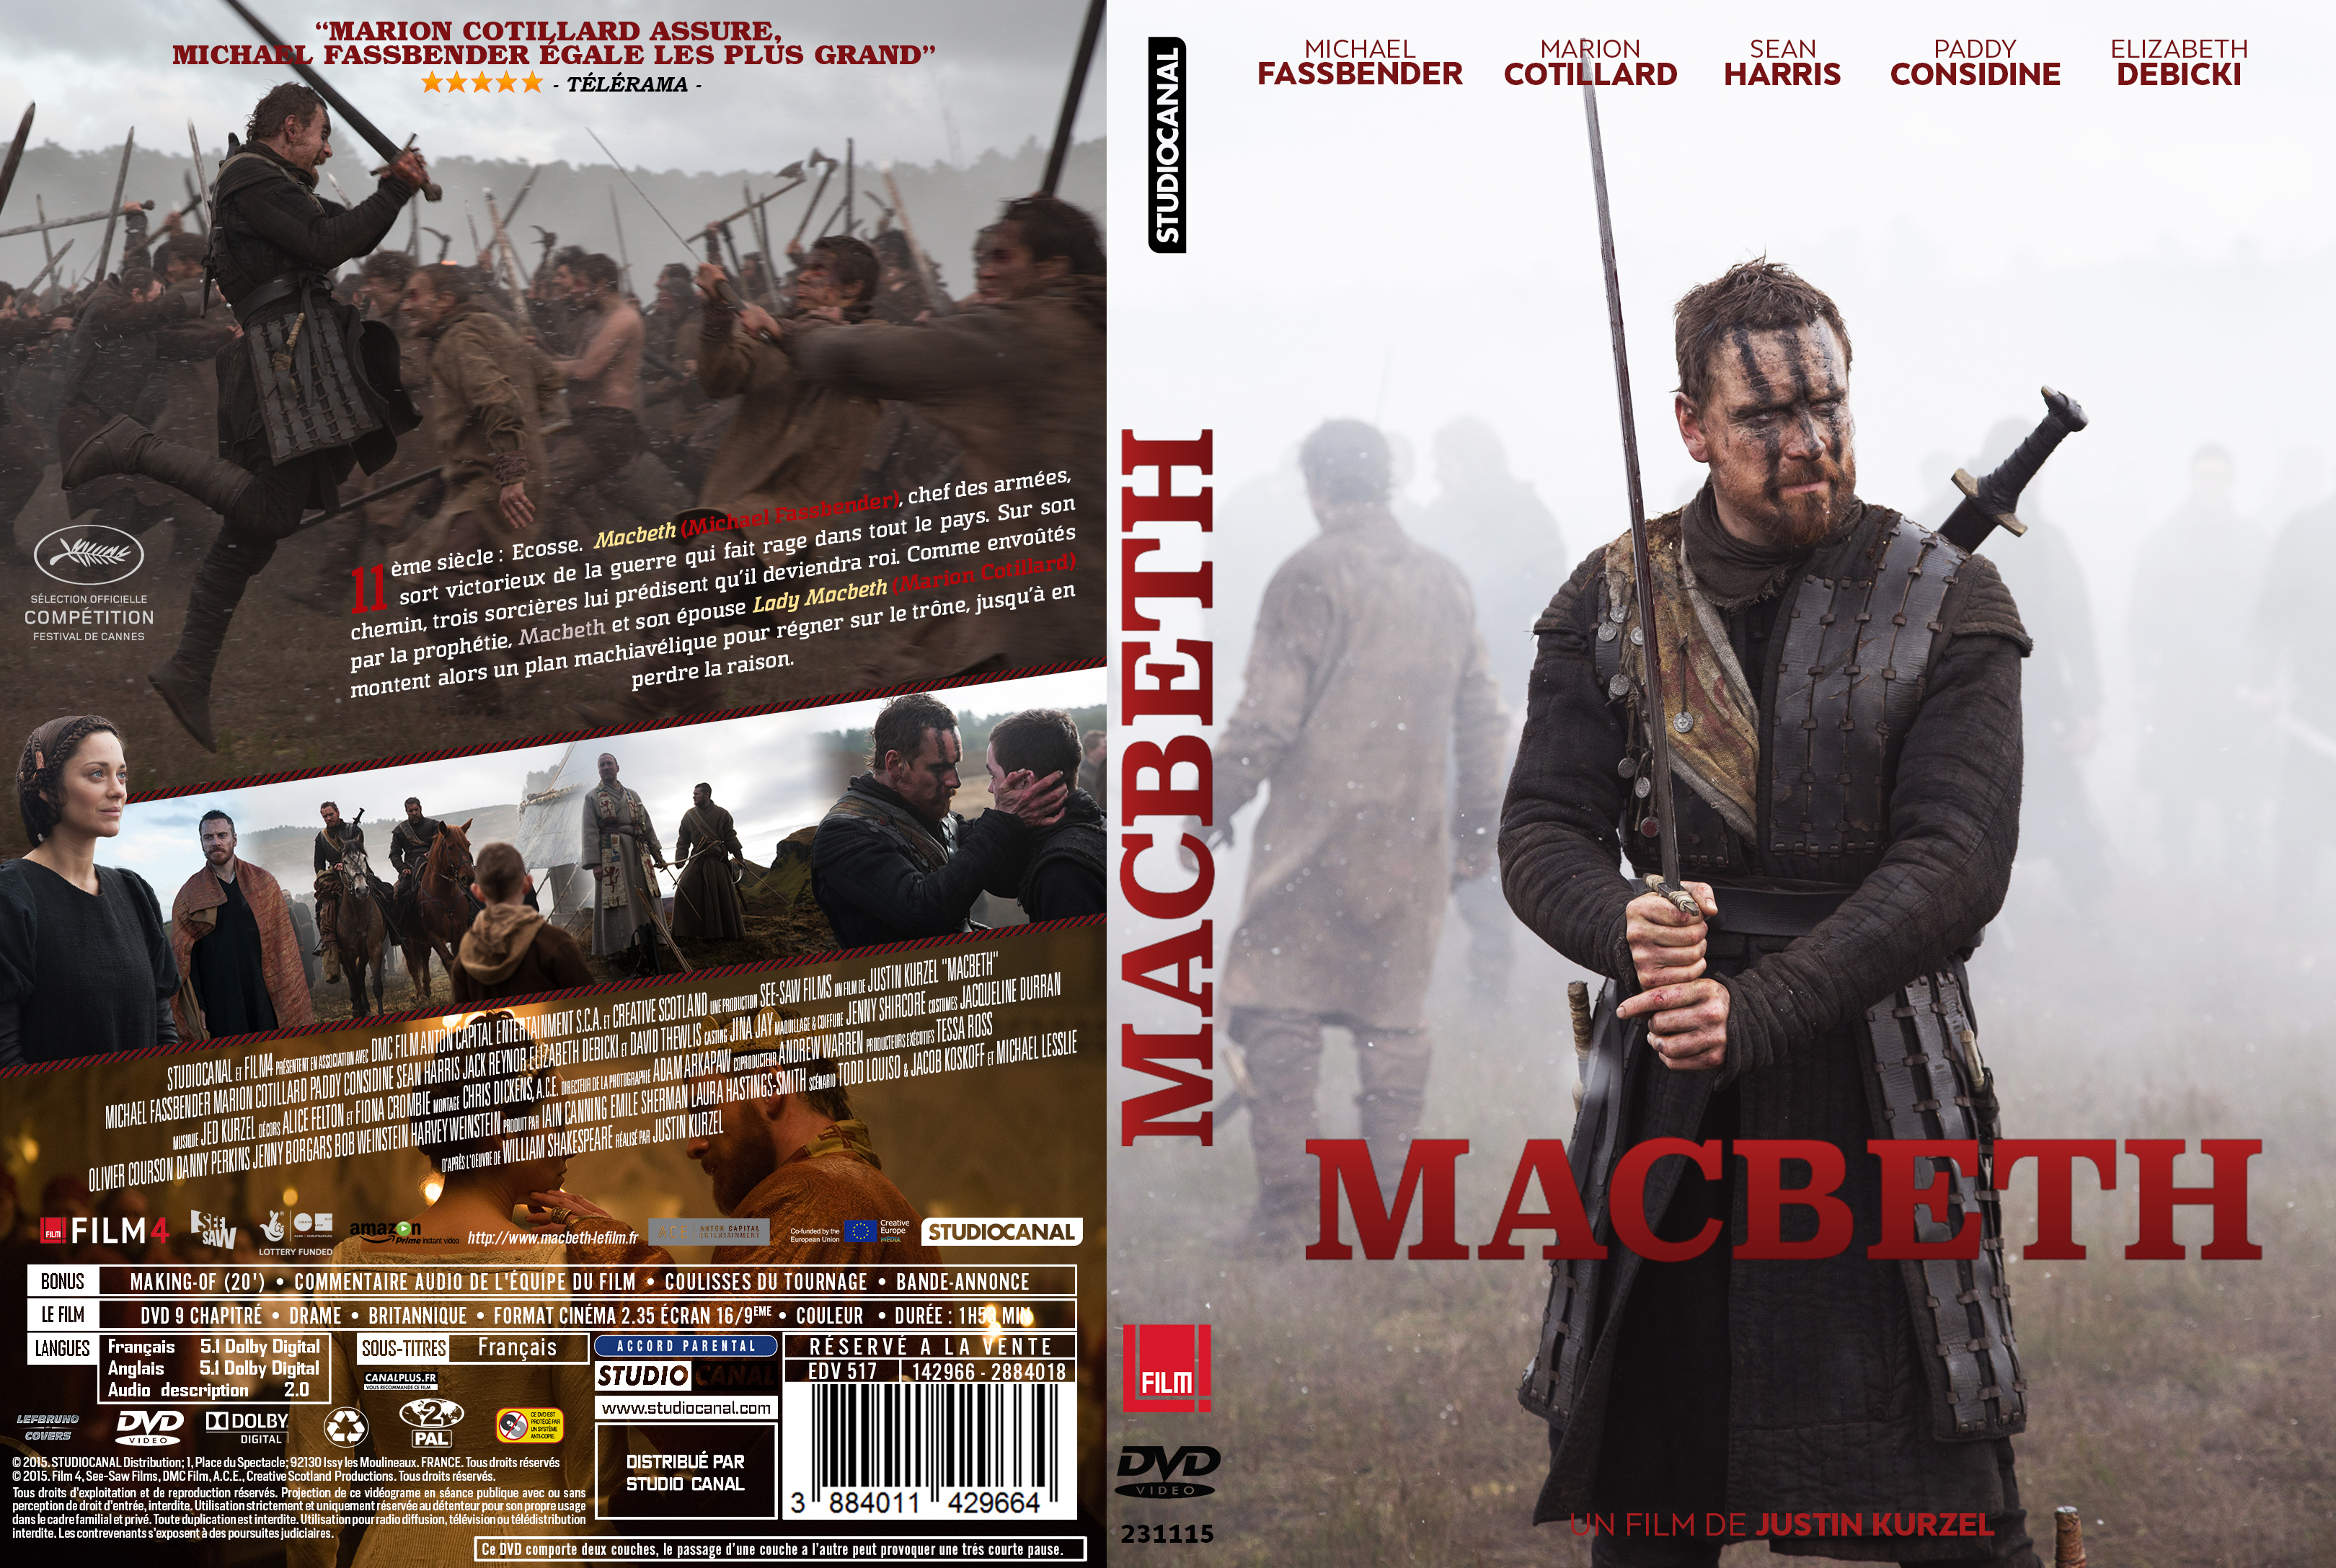 Jaquette DVD Macbeth (2015) custom v2